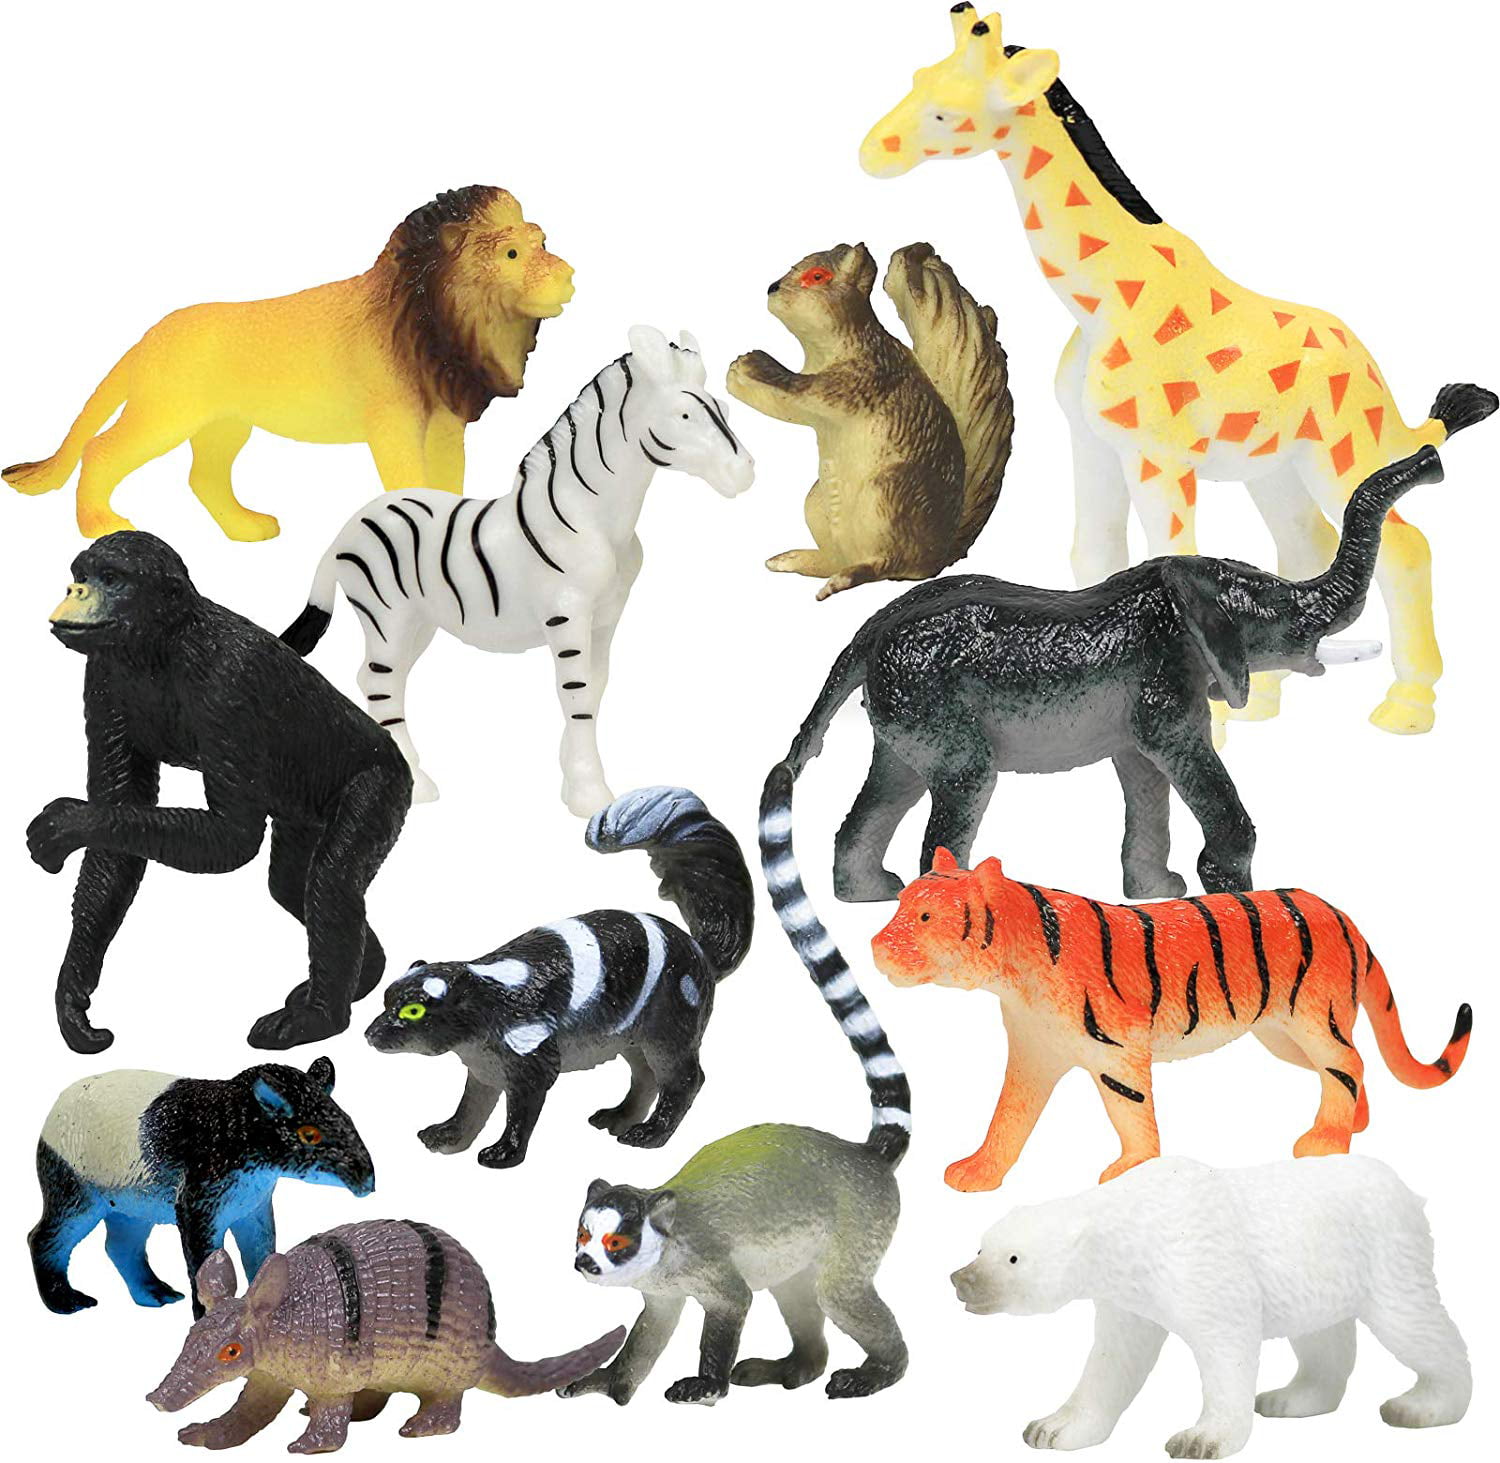 mini zoo figurines